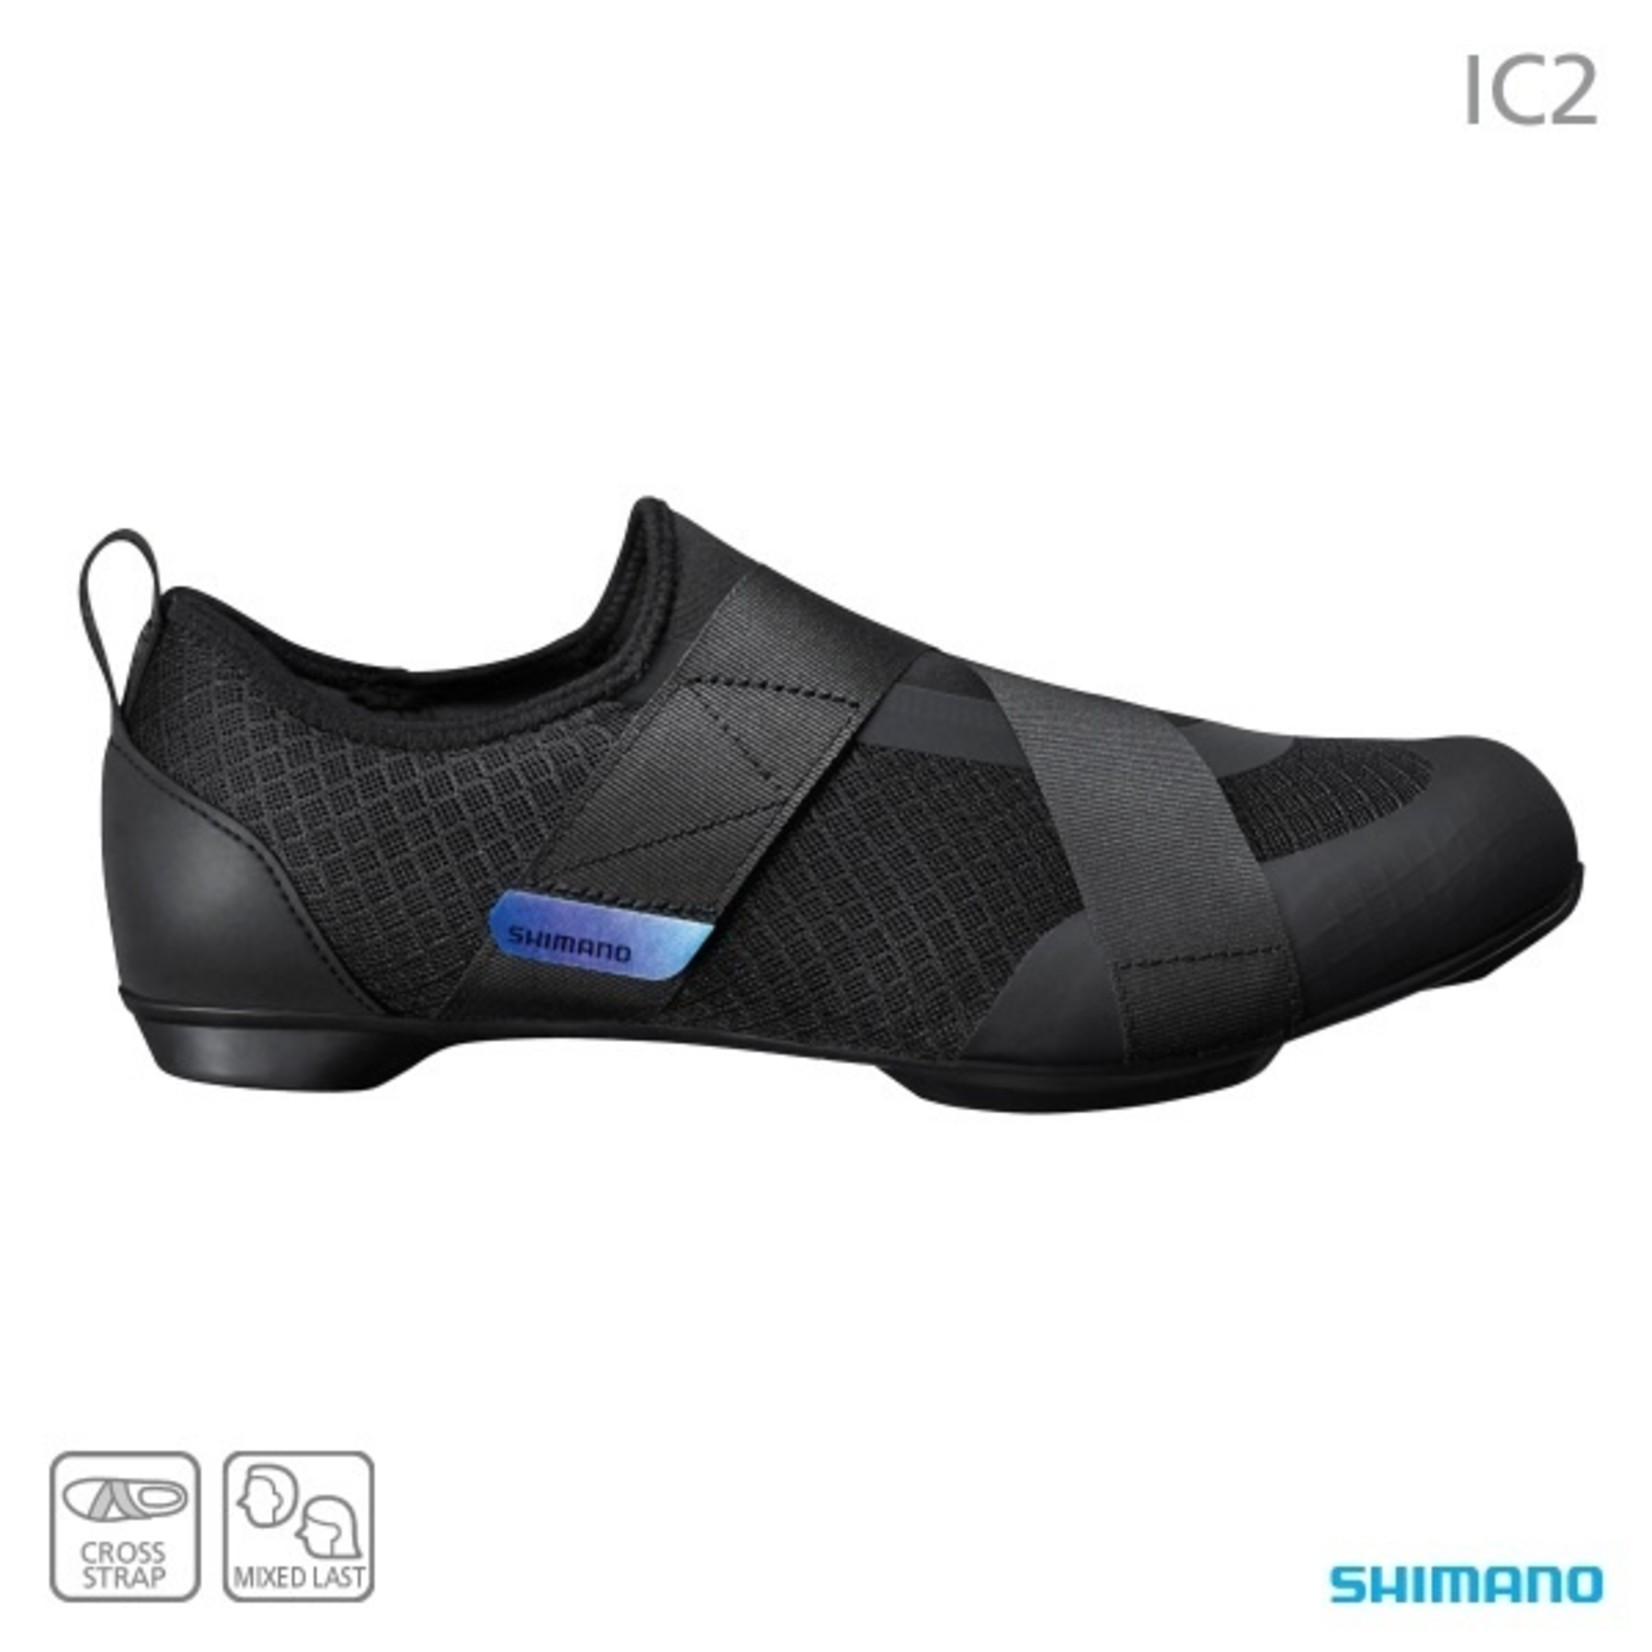 Shimano Shimano SH-IC200 Women's Indoor Comfortable Cycling Speed Shoes - Black